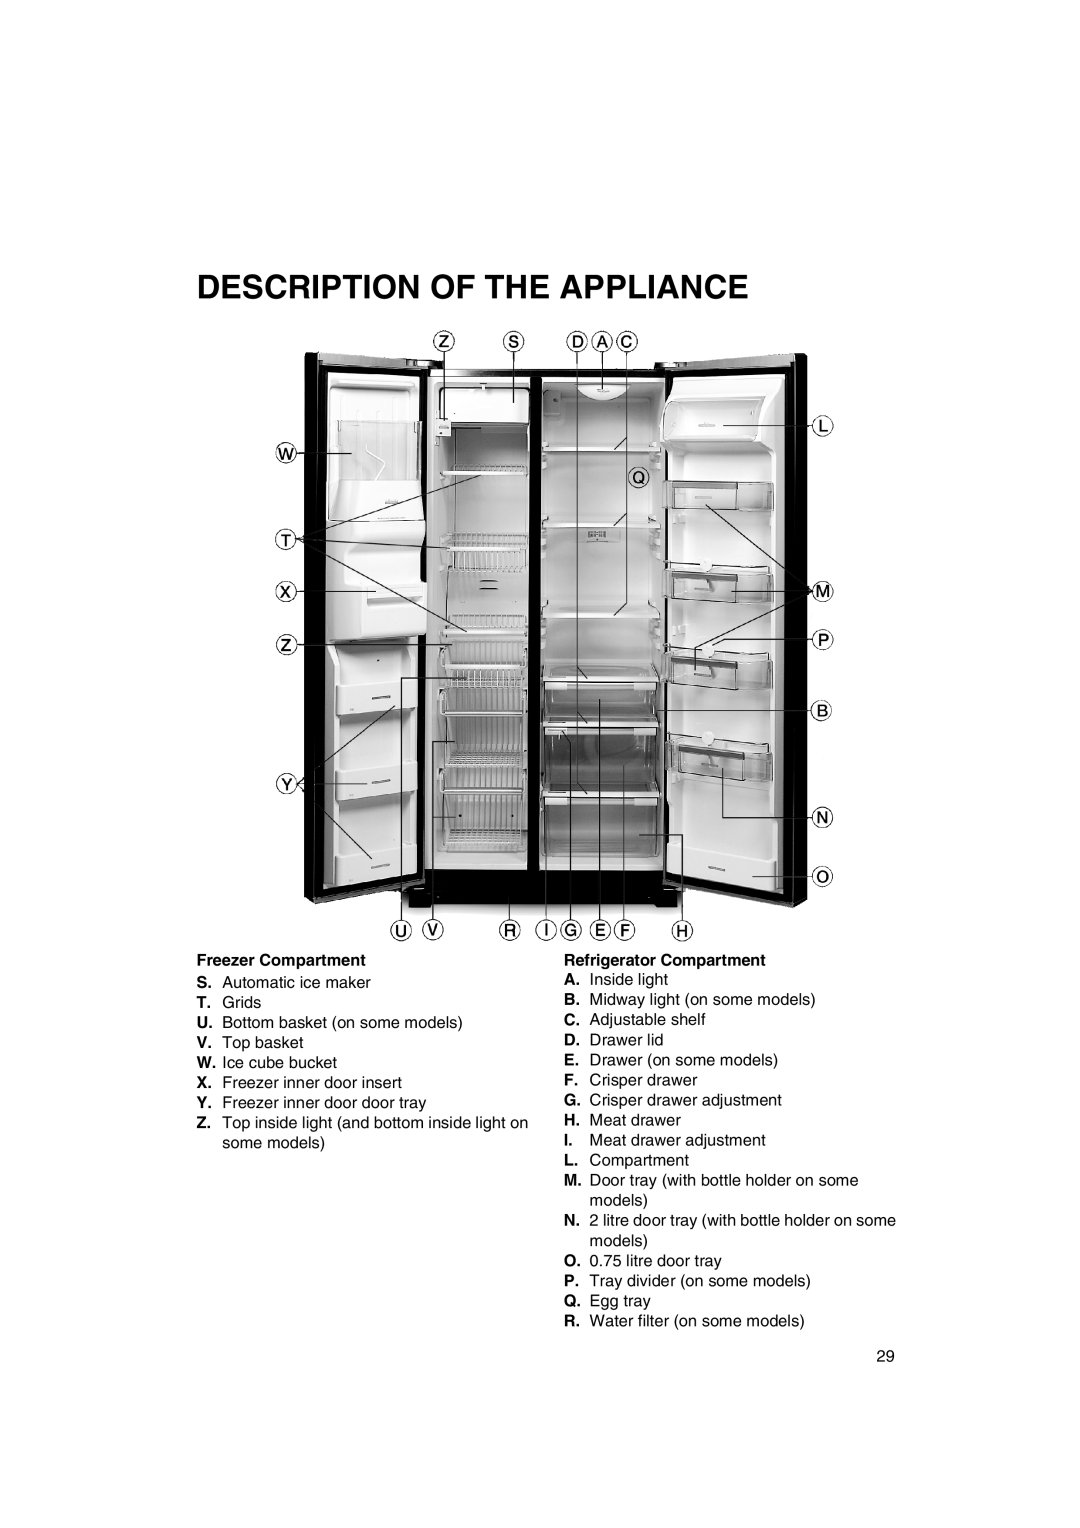 Smeg FA550XBI manual Description Of The Appliance, Freezer Compartment, Refrigerator Compartment 